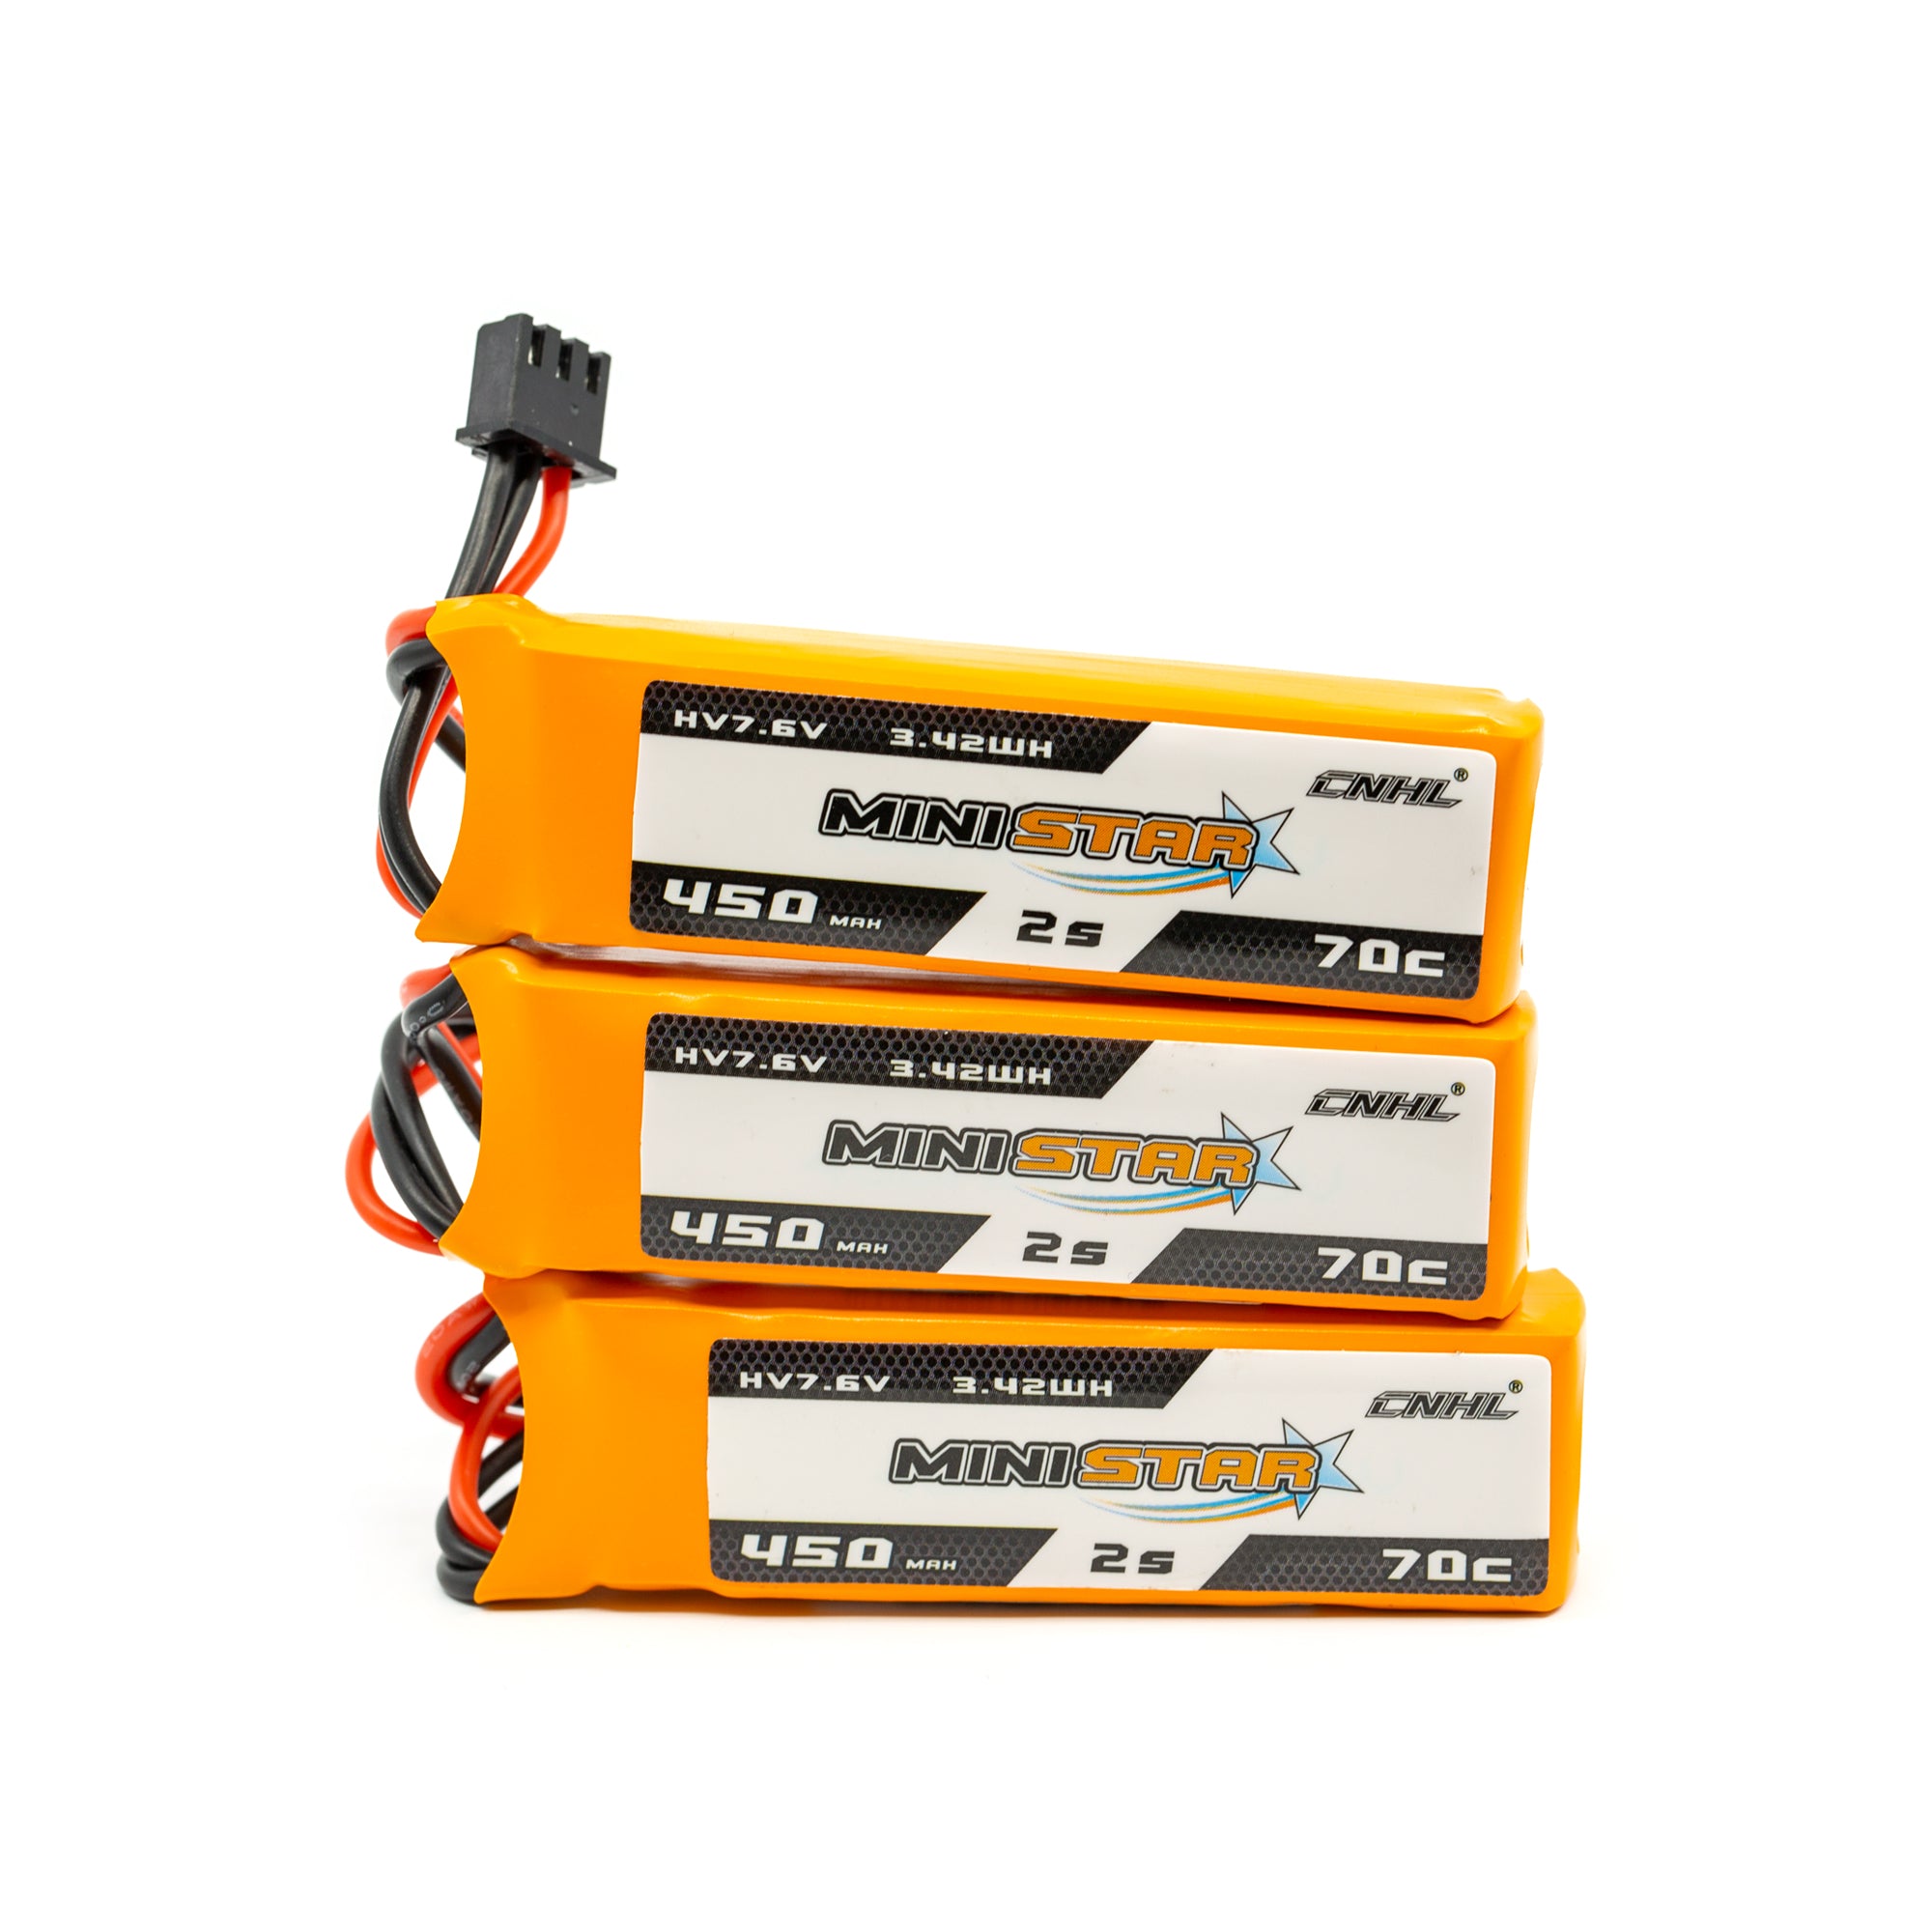 Chinahobbyline CNHL Ministar 450mAh 2s 70c Lipo Battery (3 PACK) [DG]